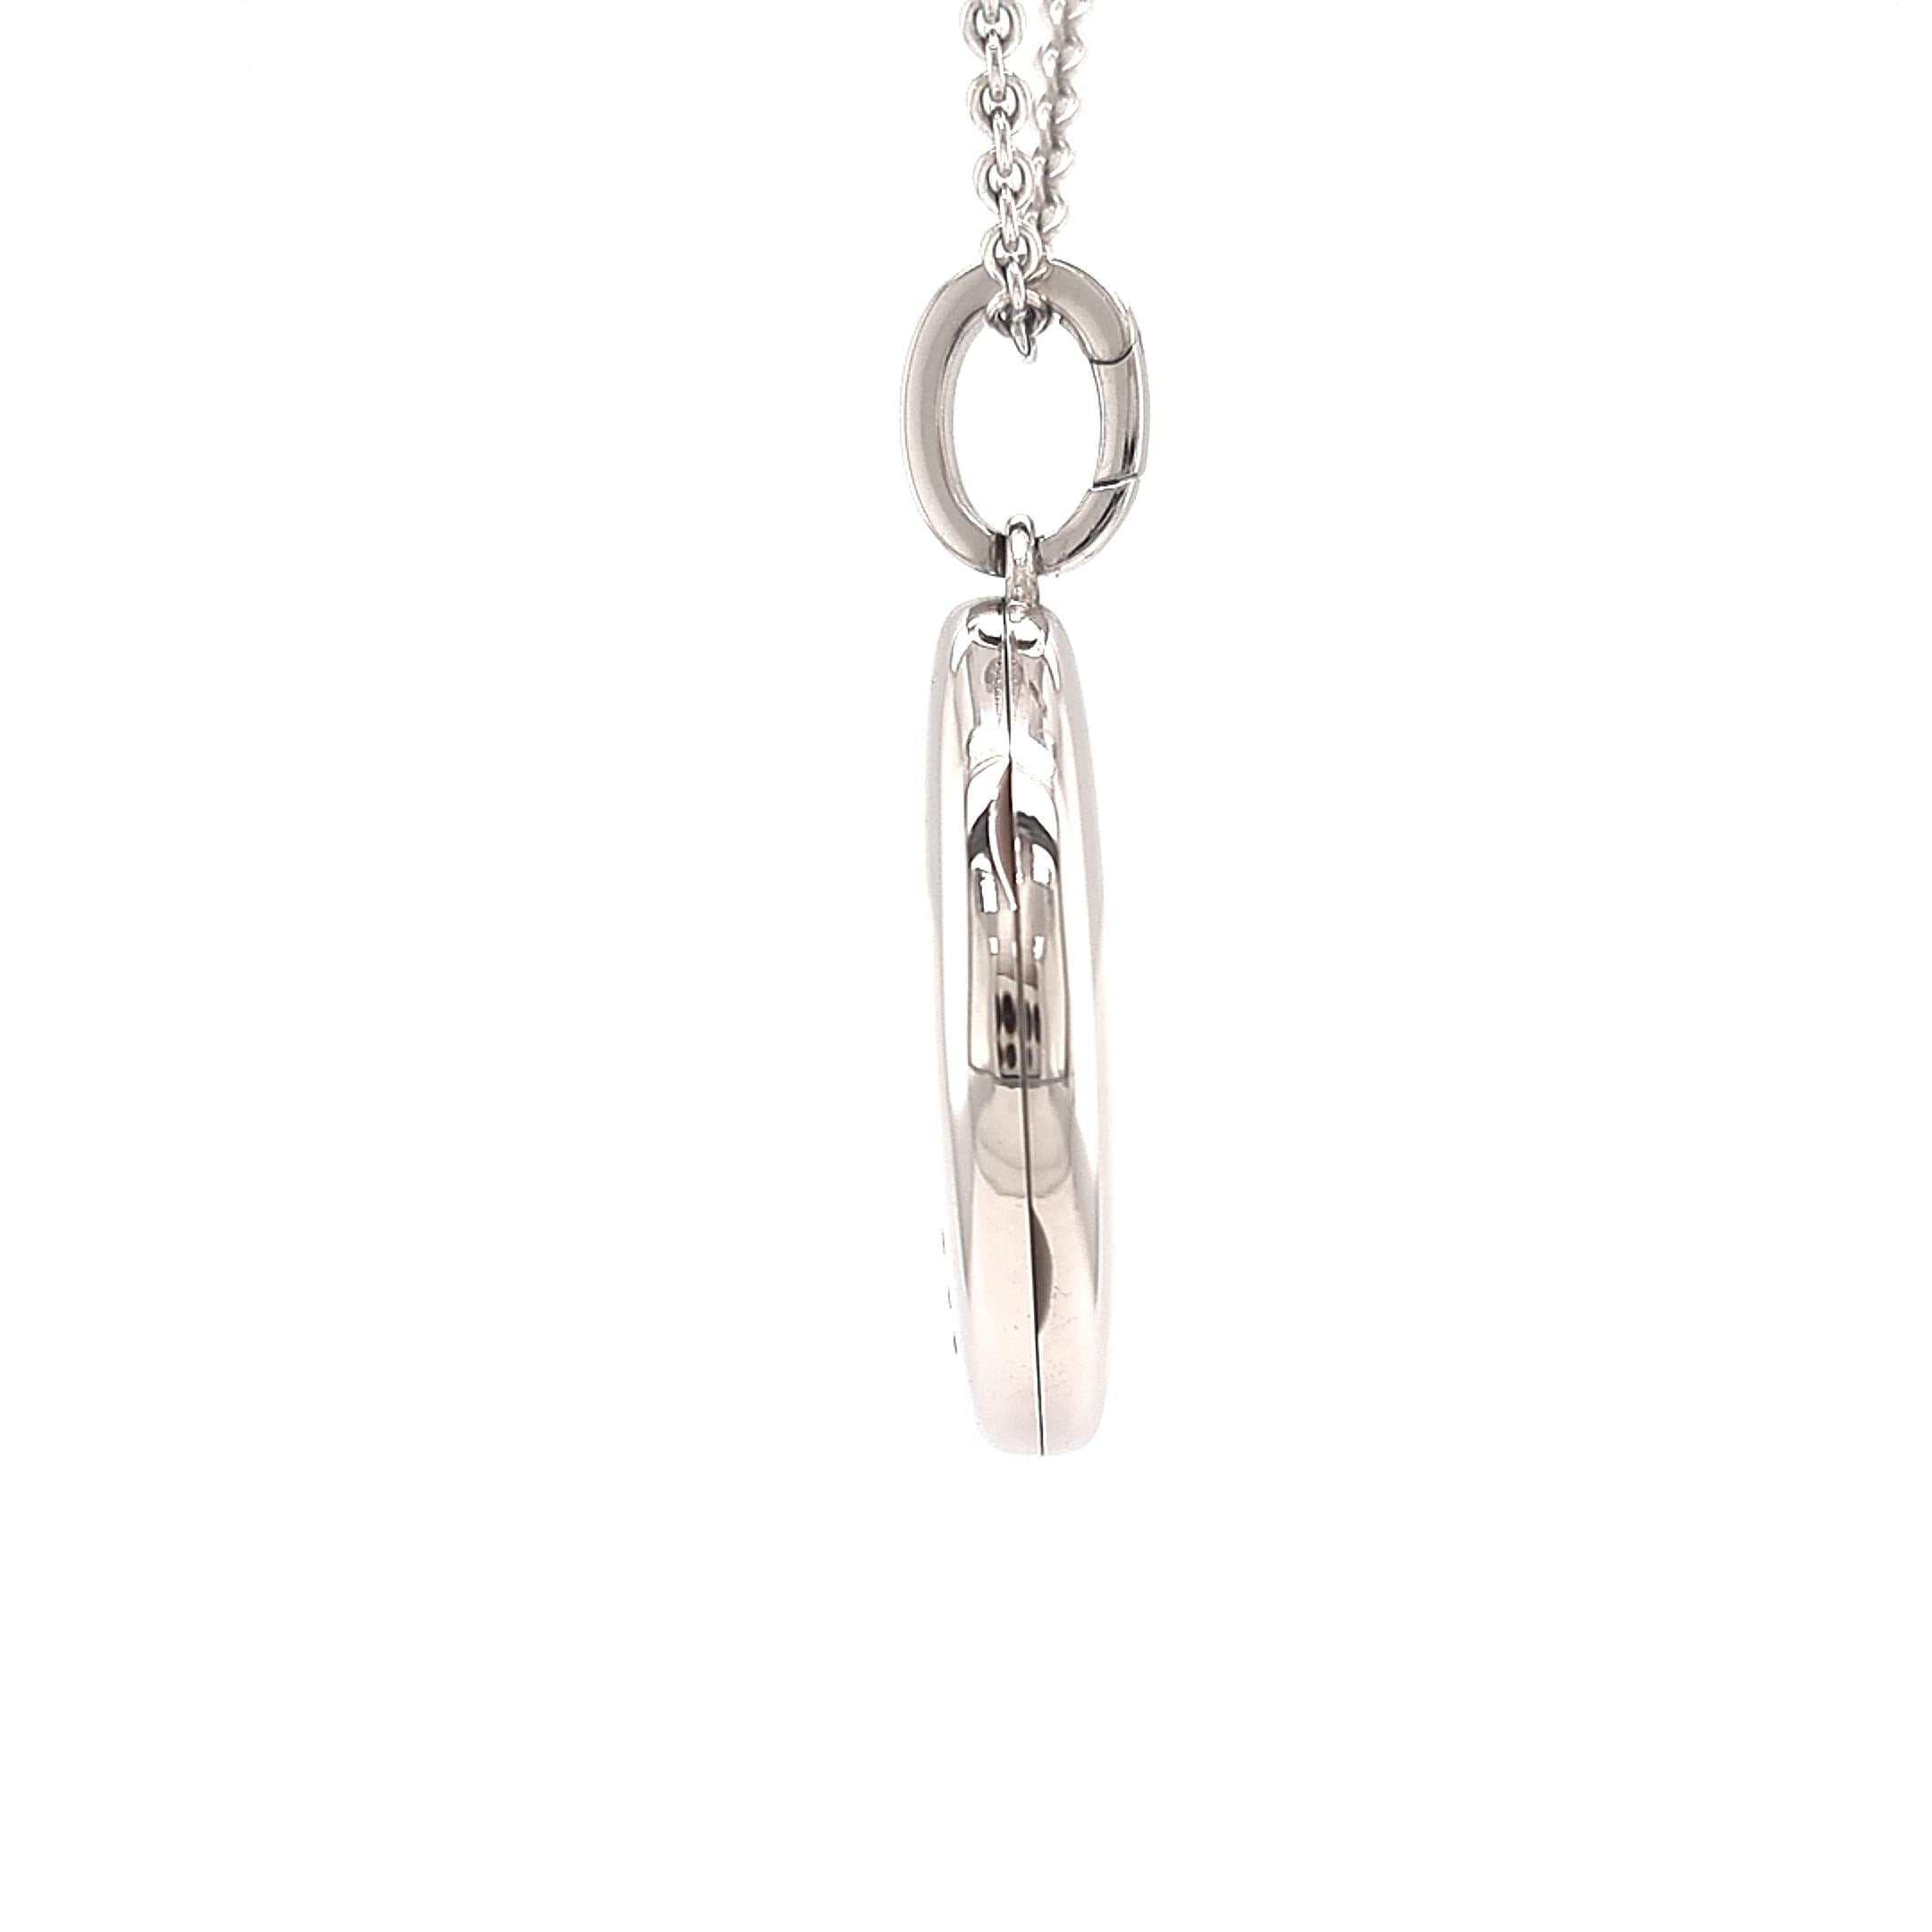 Oval Locket Pendant Necklace Solid 18k White Gold 4 Diamonds 0.04 Carat H VS For Sale 1